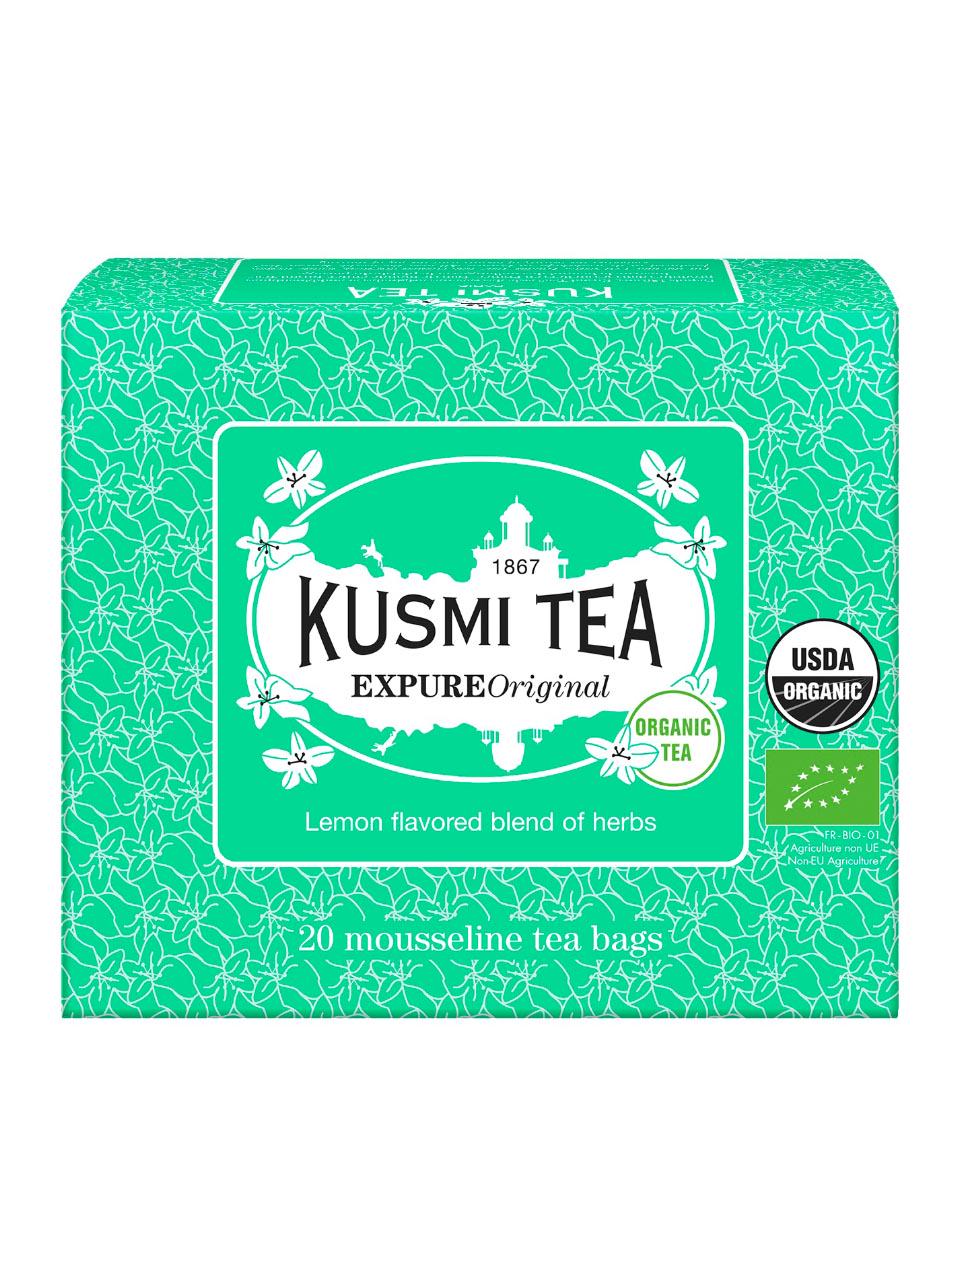 KUSMI TEA ORGANIC - Expure Original Box 20 Tea Bags Organic